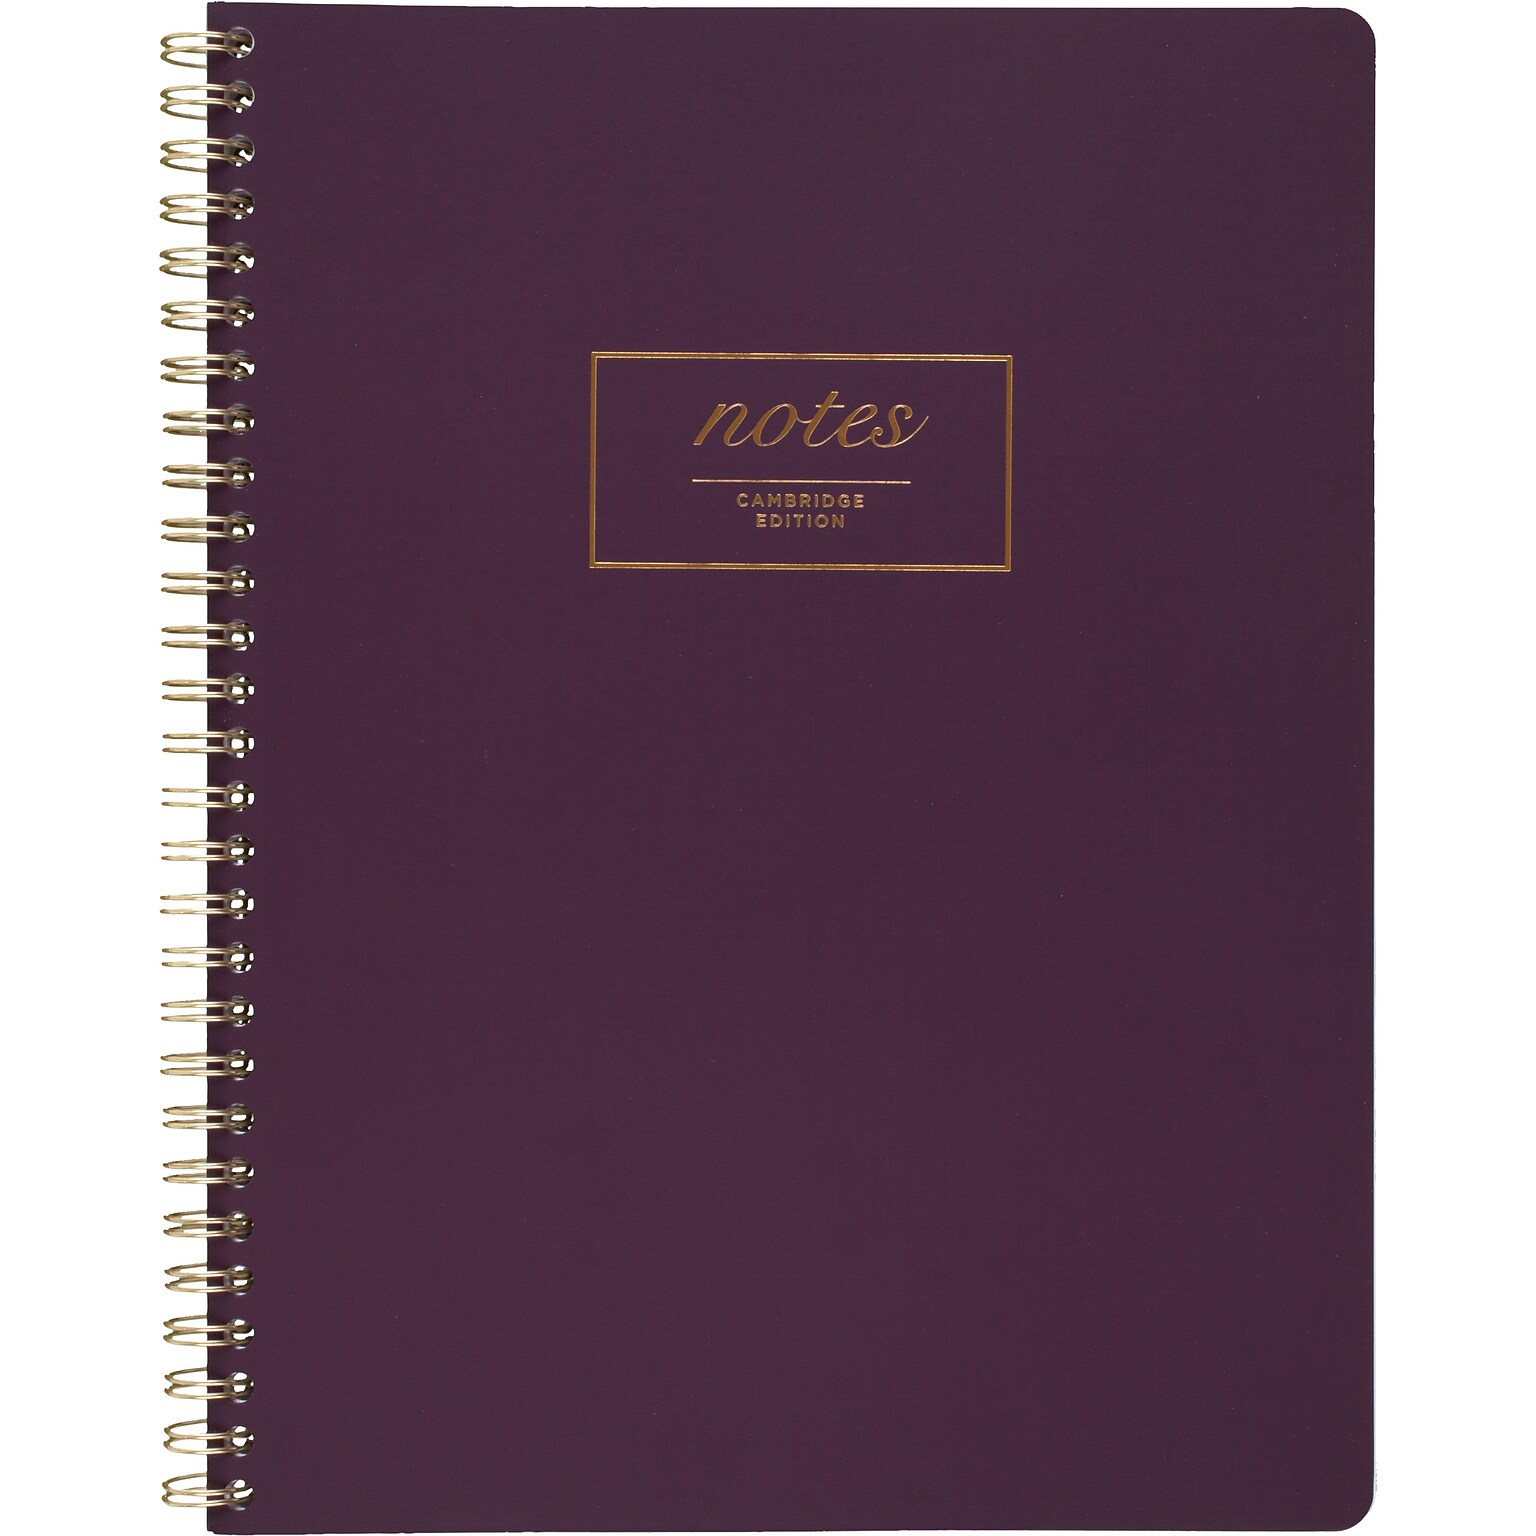 Cambridge Fashion Twinwire Business Notebook, 80 Sheets, 9-1/2 x 7-1/4, Purple (49556)